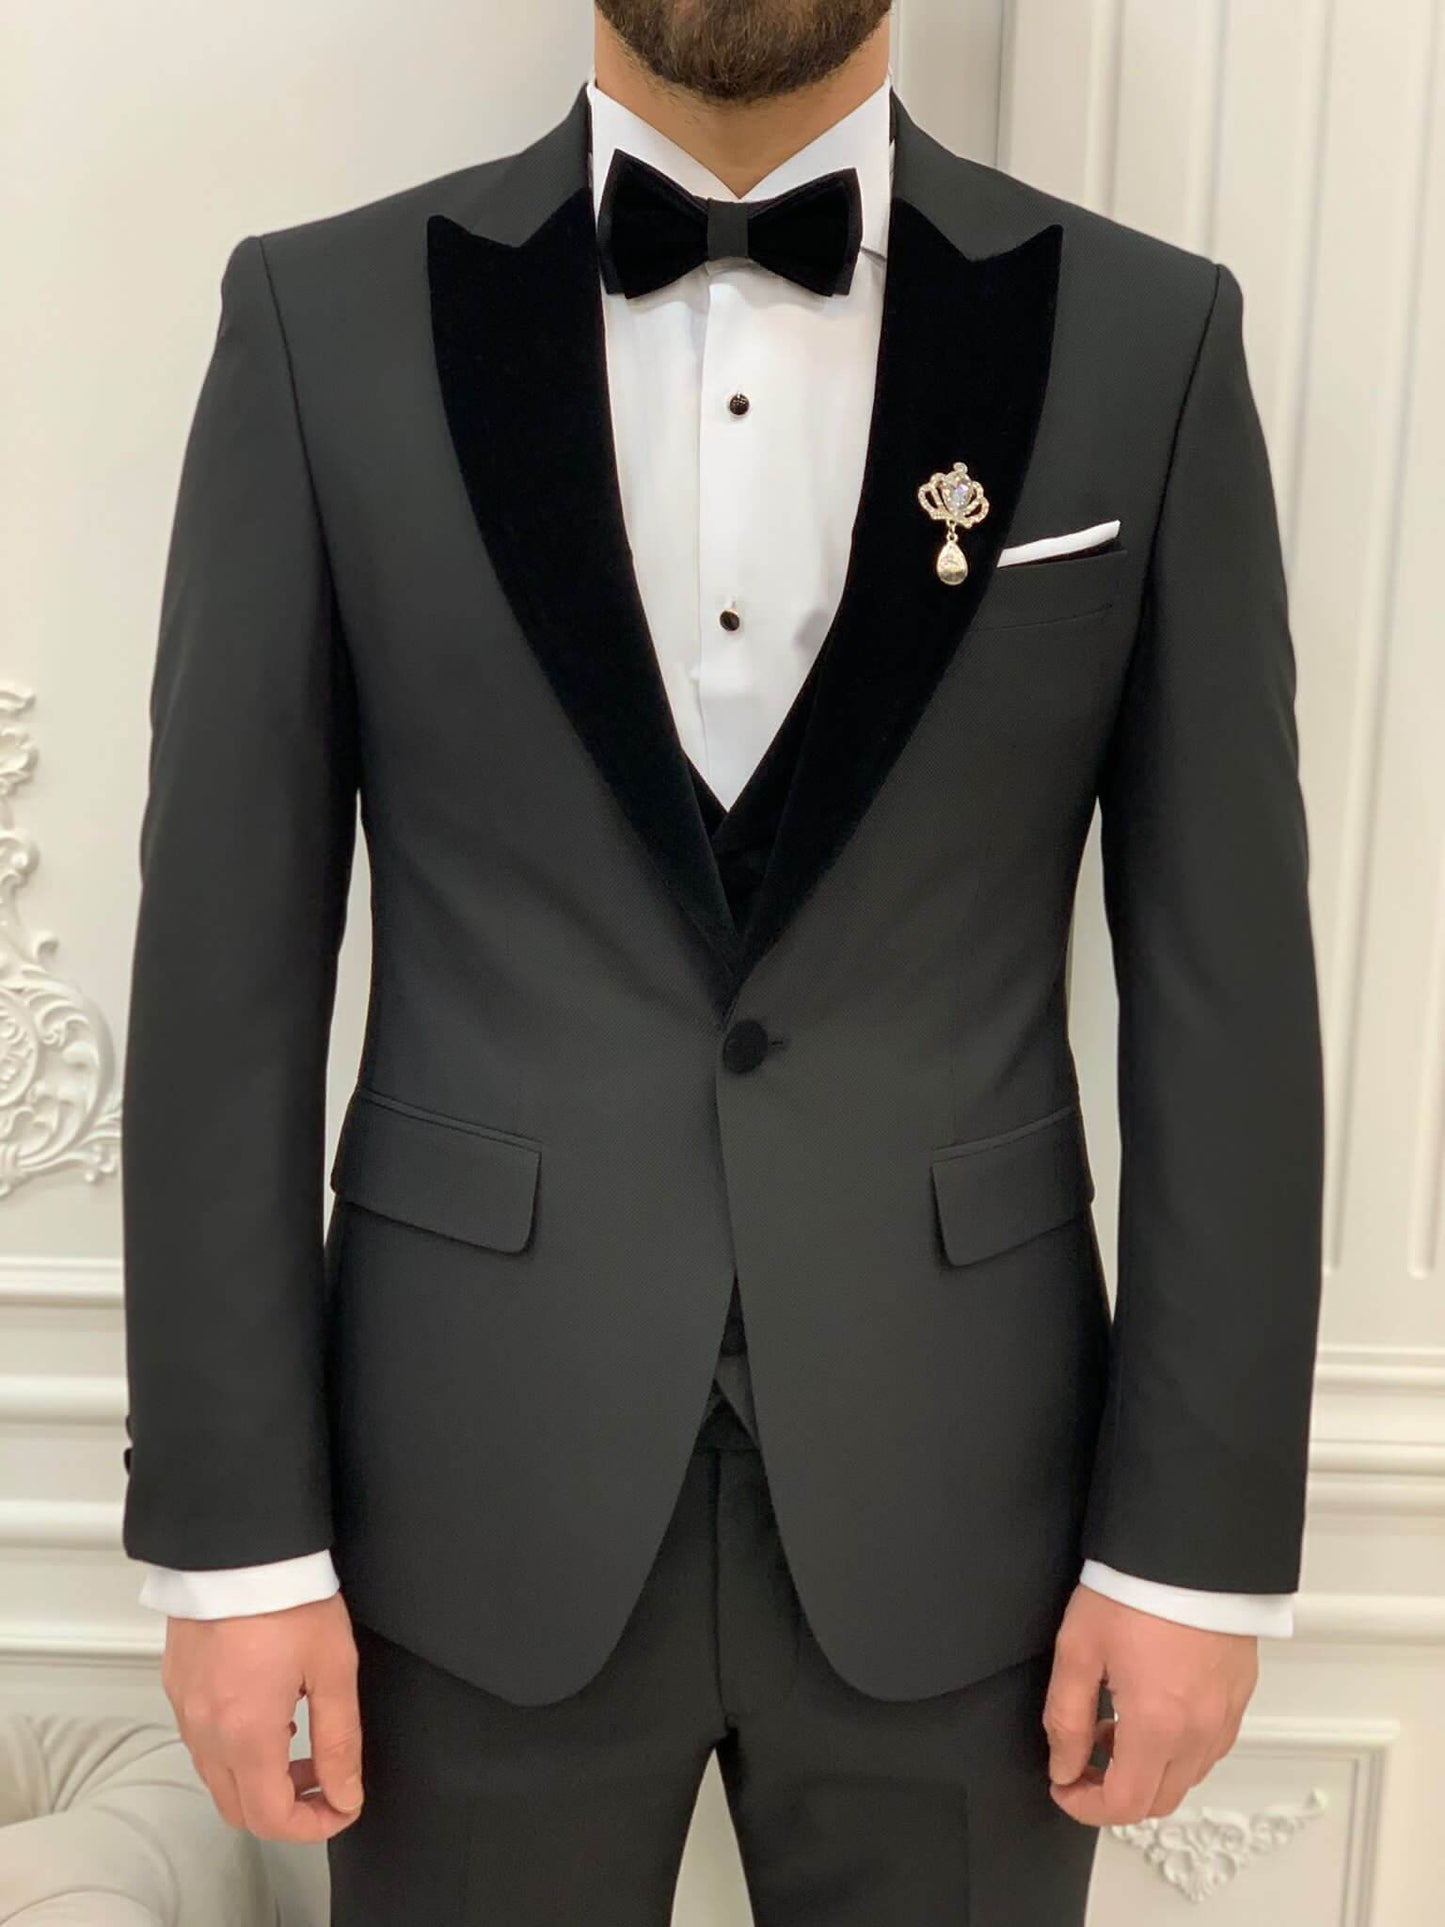 Model Wearing Black Tuxedo with Peak Lapel, Single Button, Slim-Fit Italian Cut at Formal Event